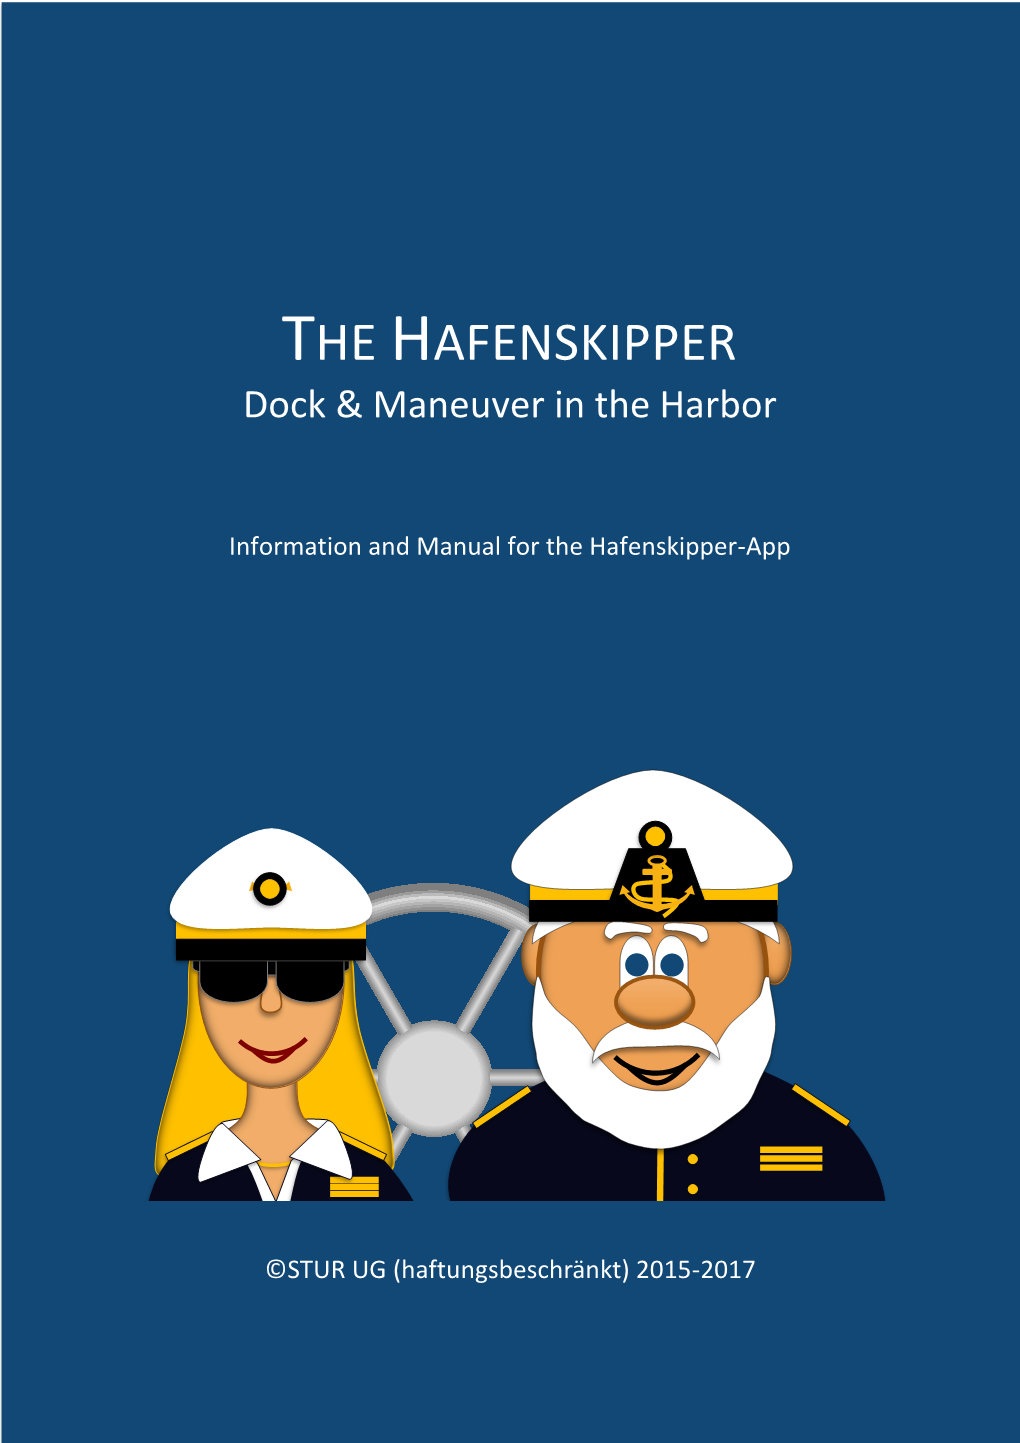 The Hafenskipper Information & Manual